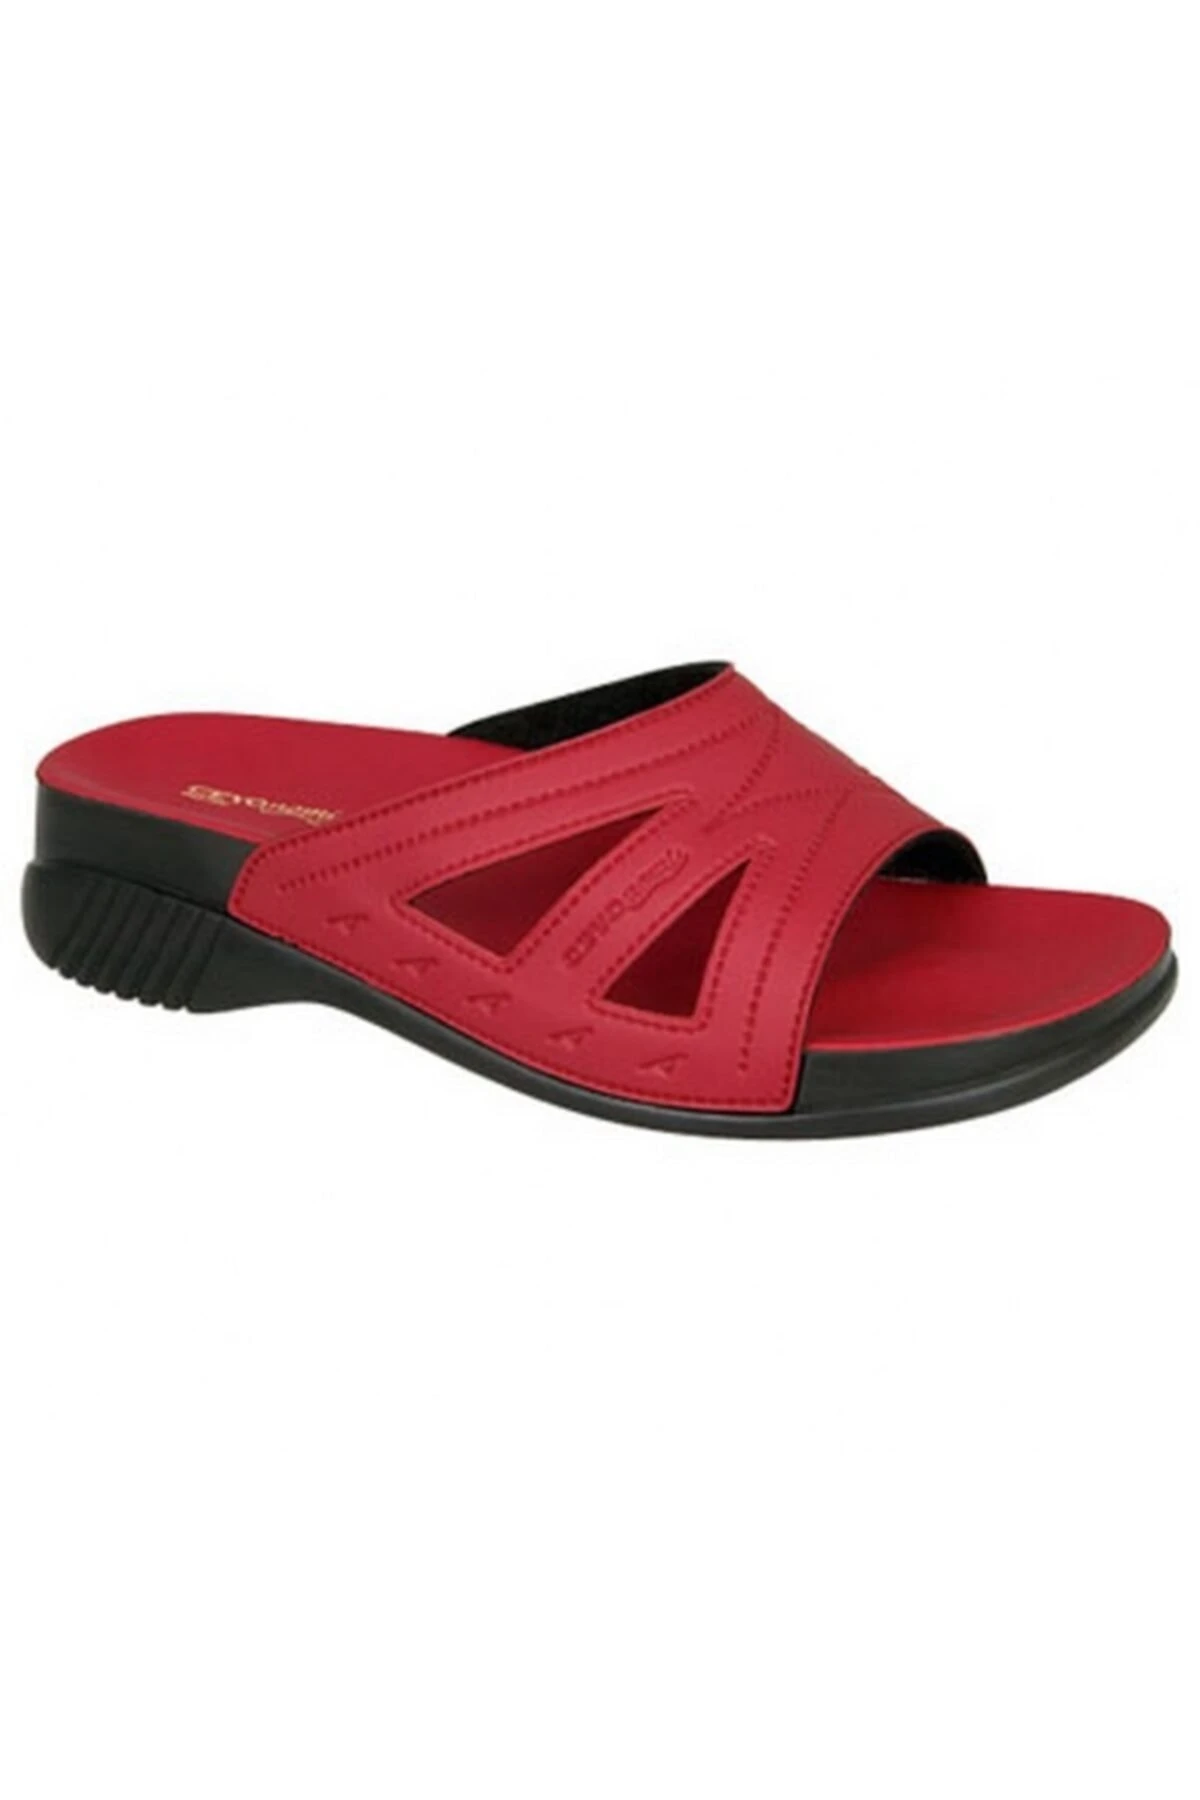 Ceyo 8Y Belıze אדום נשים נעלי נעלי בית סנדלי|Slippers| - AliExpress